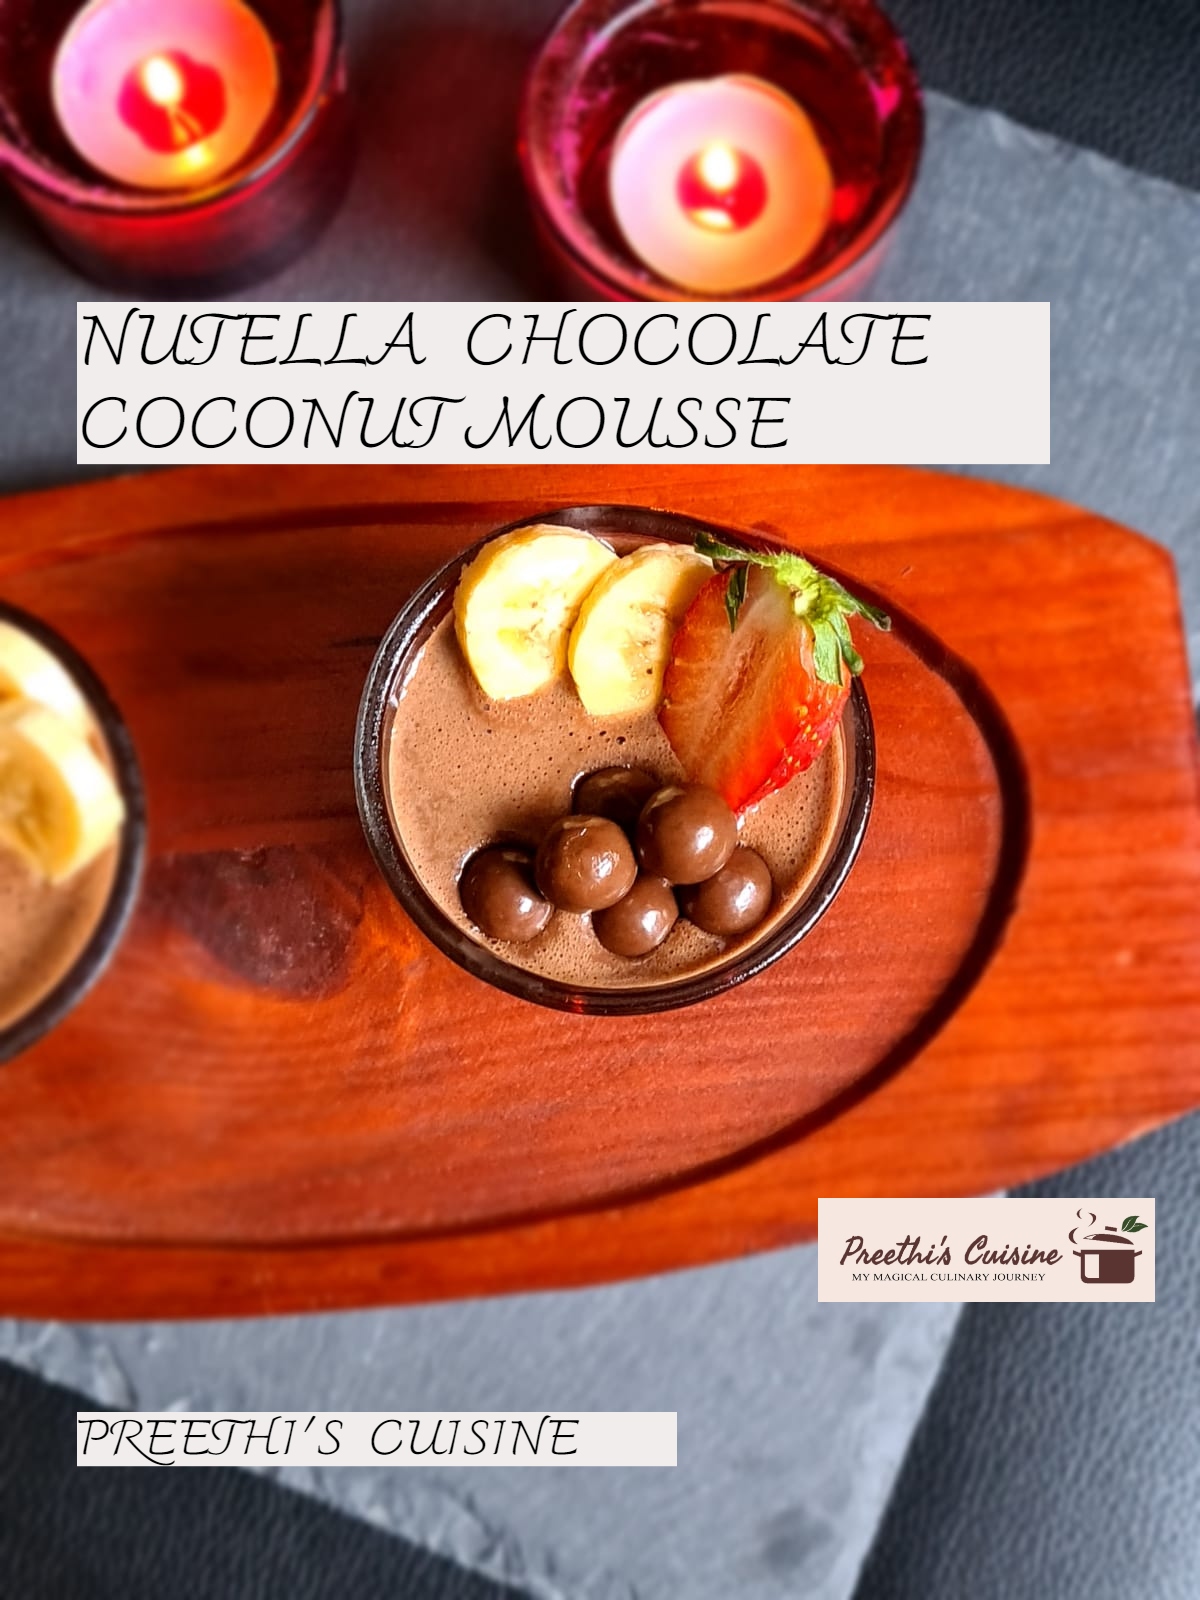 NUTELLA CHOCOLATE COCONUT MOUSSE